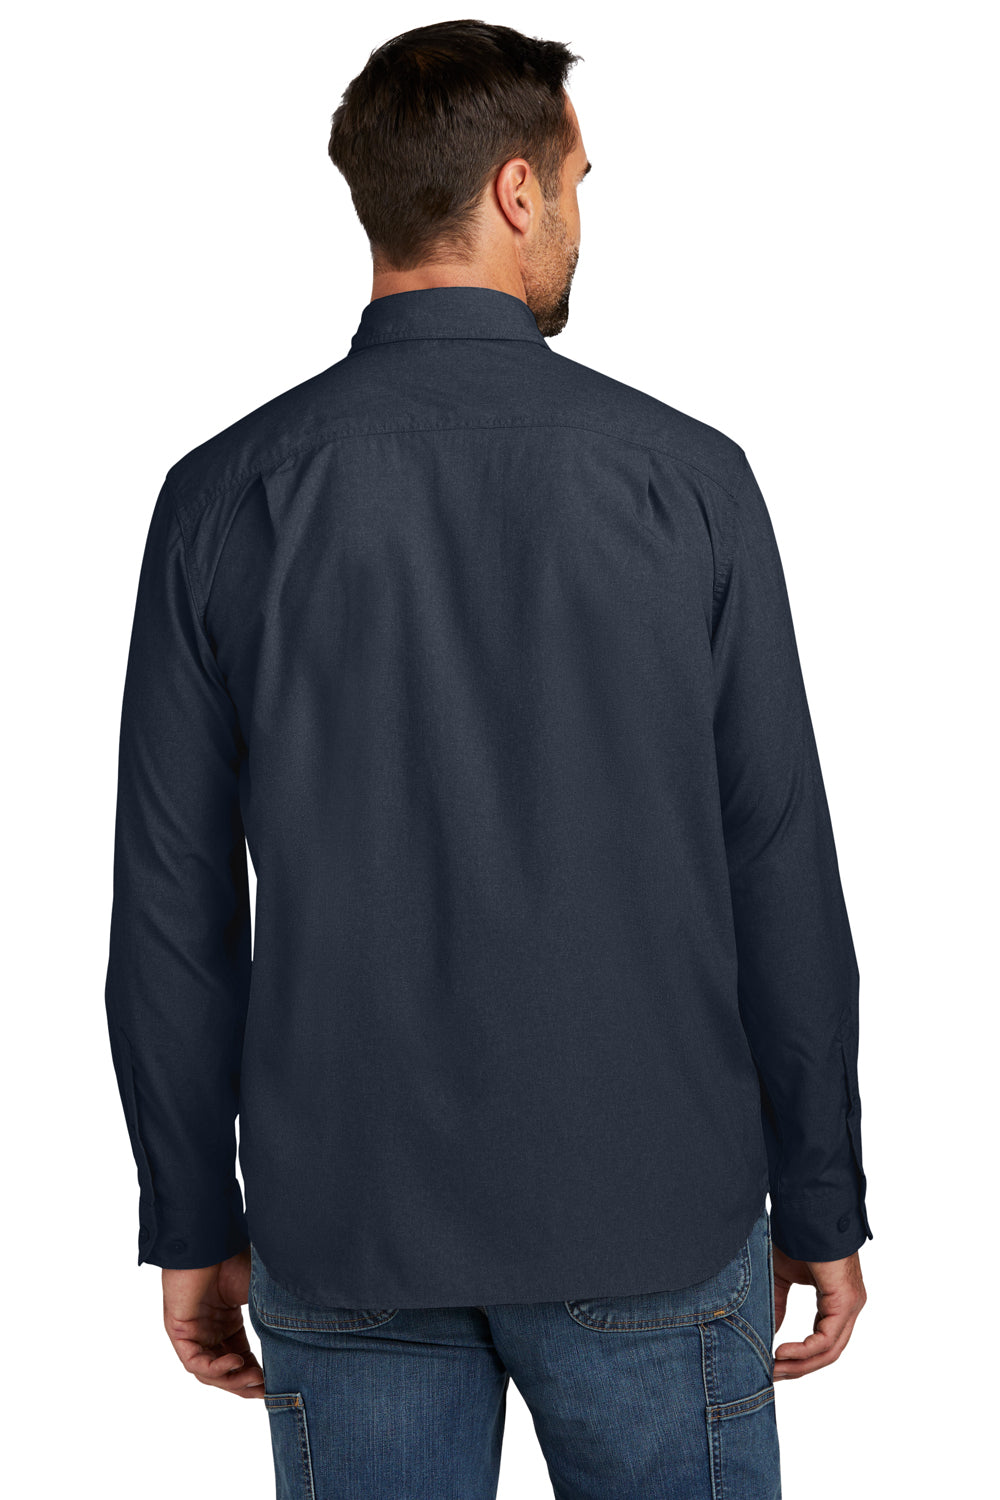 Carhartt CT105291 Mens Force Moisture Wicking Long Sleeve Button Down Shirt w/ Double Pockets Navy Blue Model Back